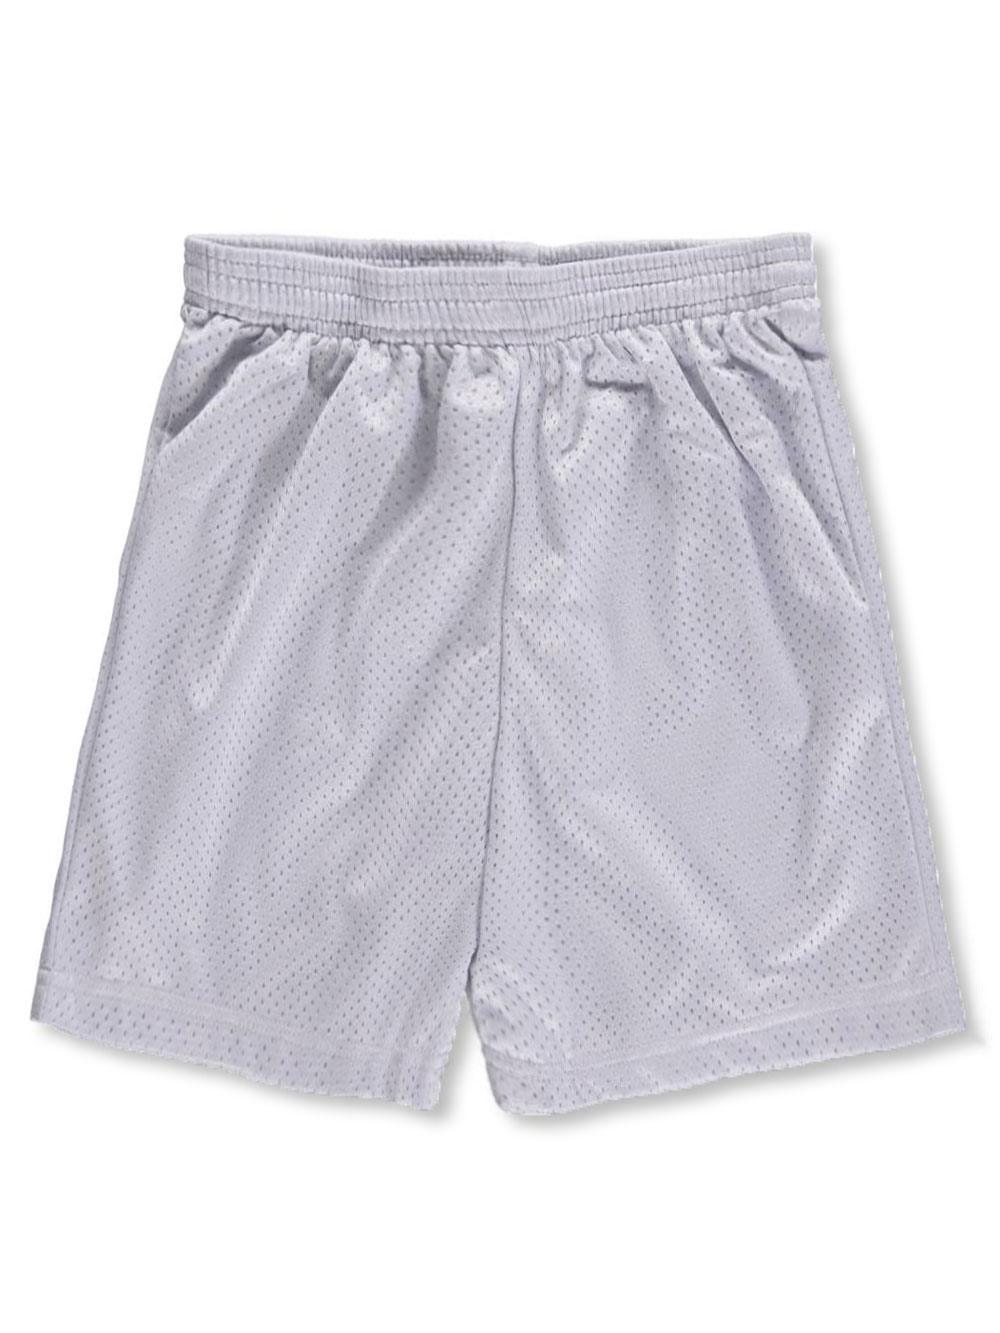 A4 Mesh Unisex Gym Shorts (Youth Sizes XS - XL) | eBay